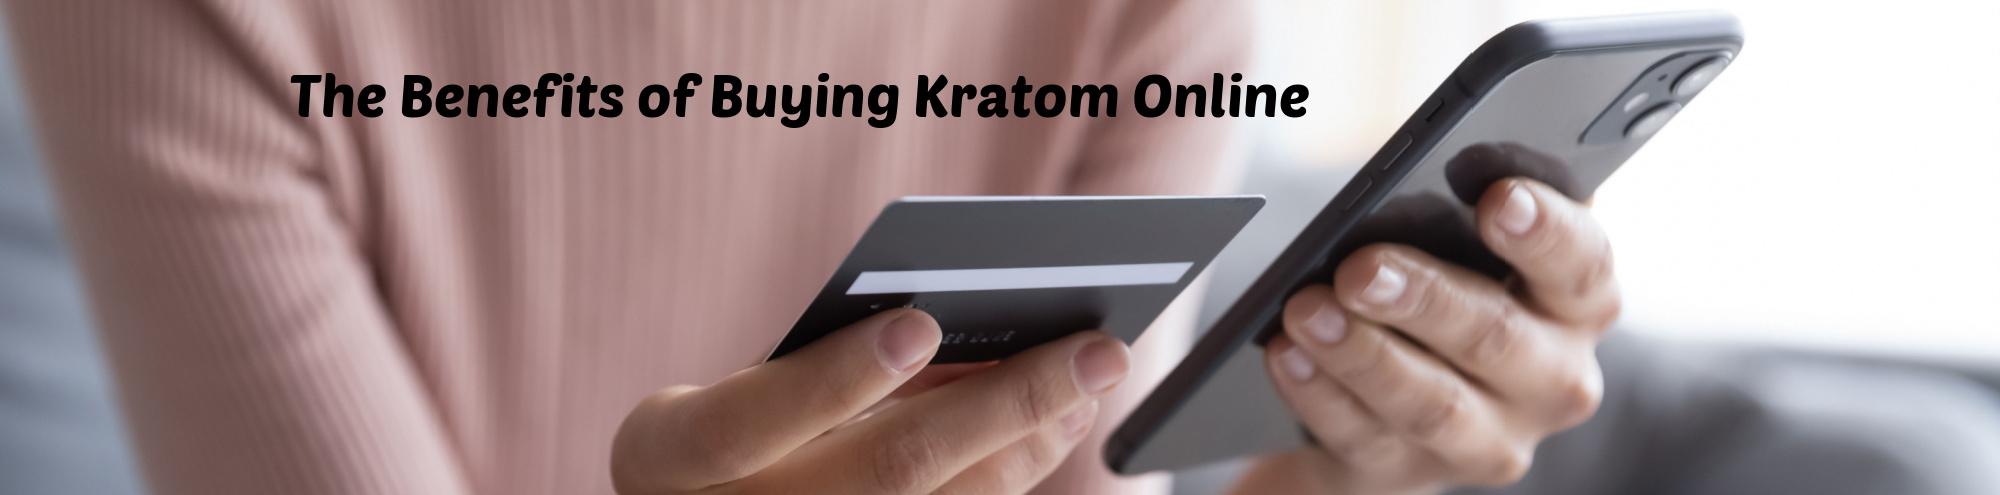 image of the benefits of buying kratom online